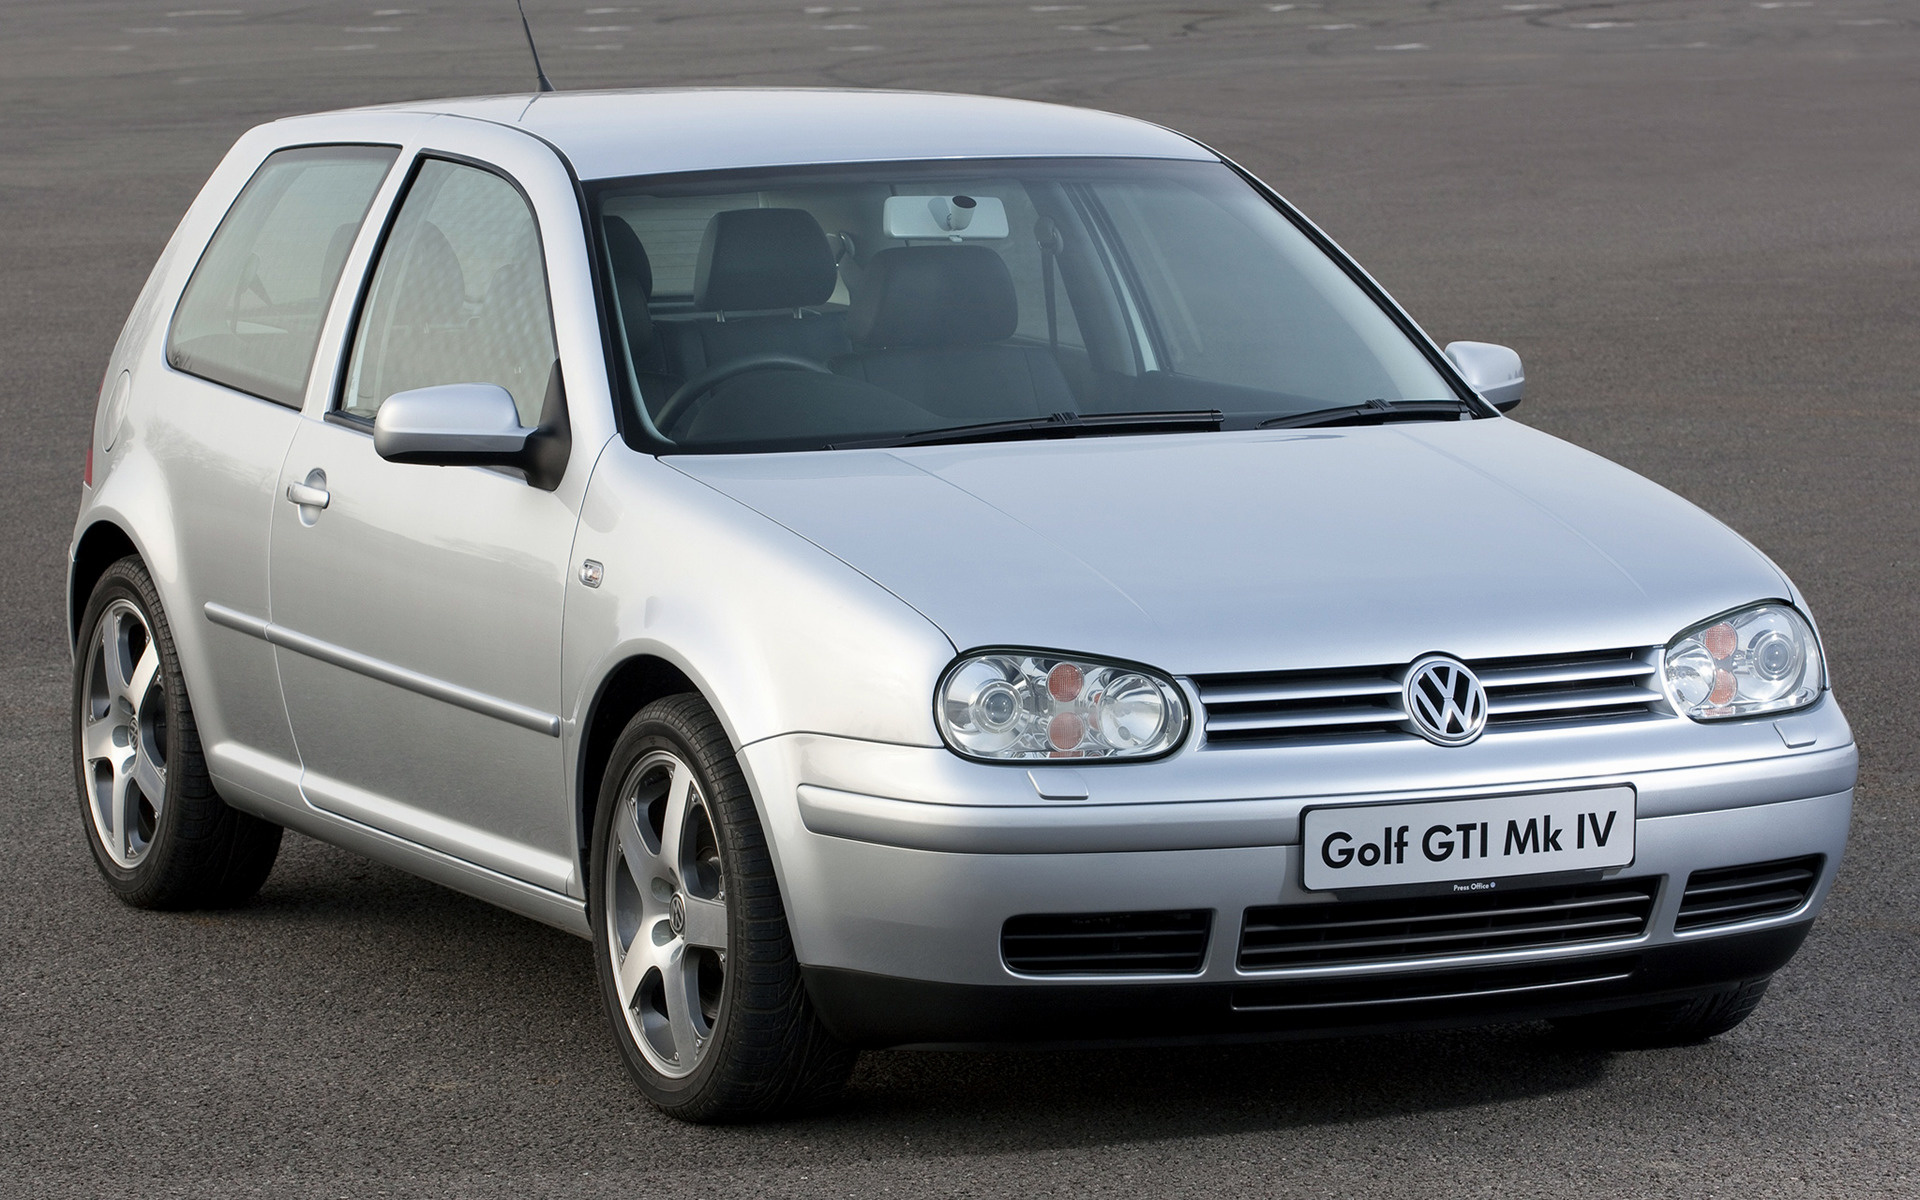 Гольф 4 2001 год. Volkswagen Golf 4 GTI. Volkswagen Golf GTI 2001. VW Golf mk4. Volkswagen гольф 4 1998 года.